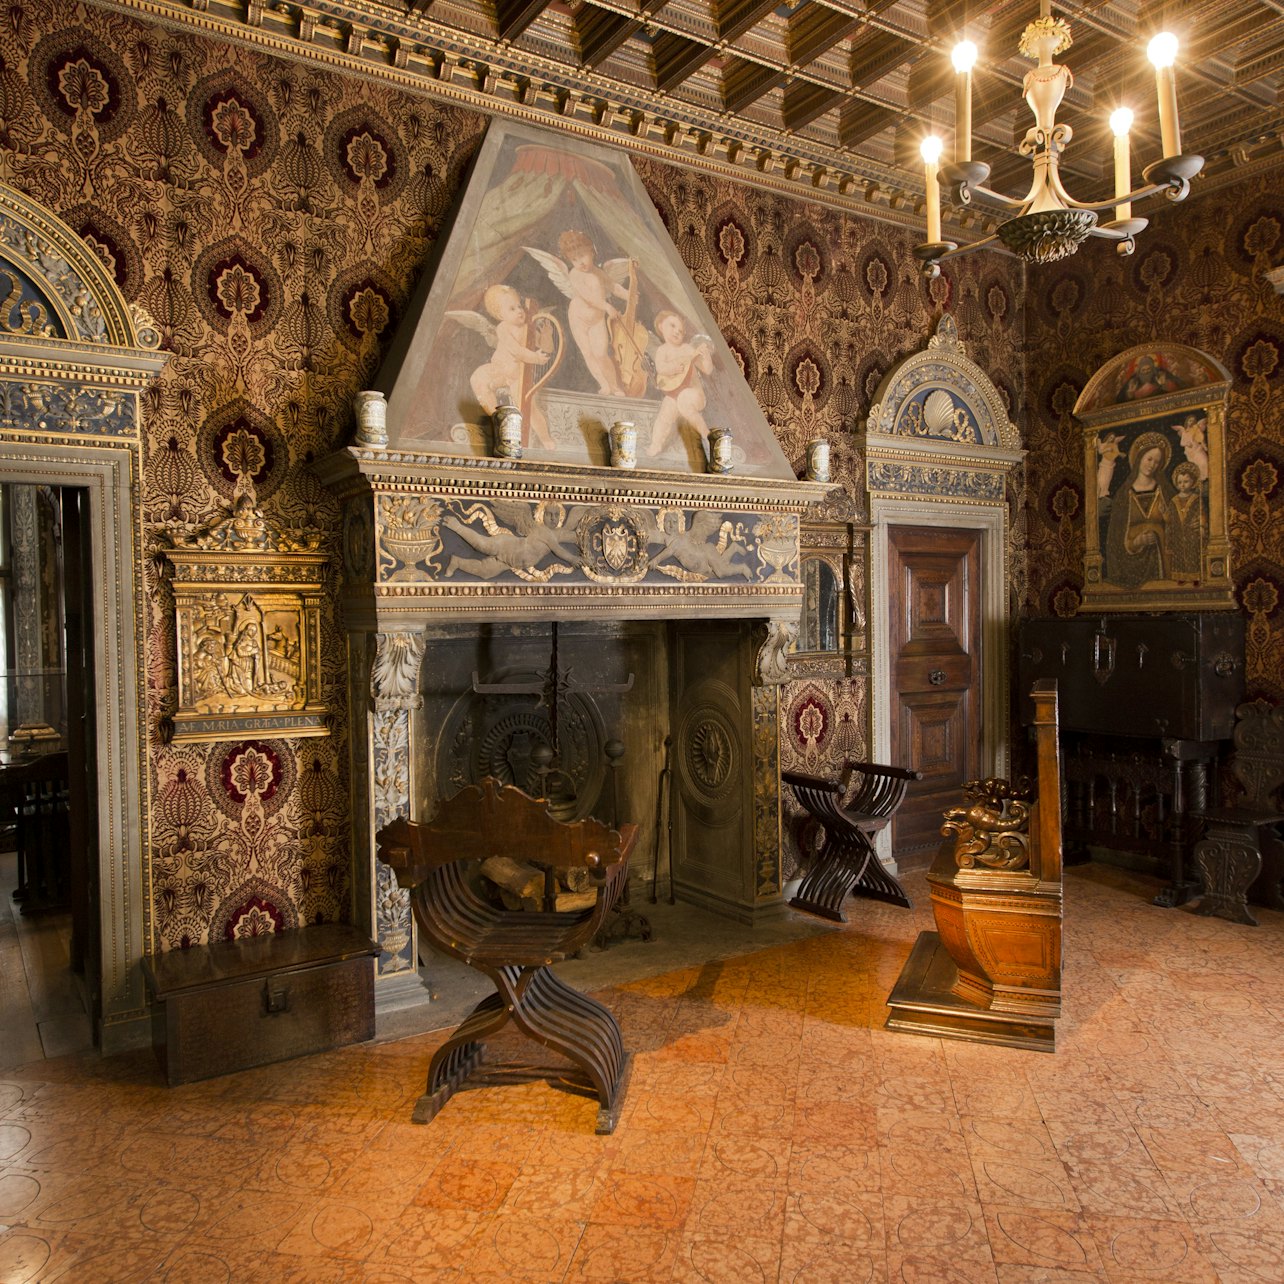 Bagatti Valsecchi Museum - Accommodations in Milan